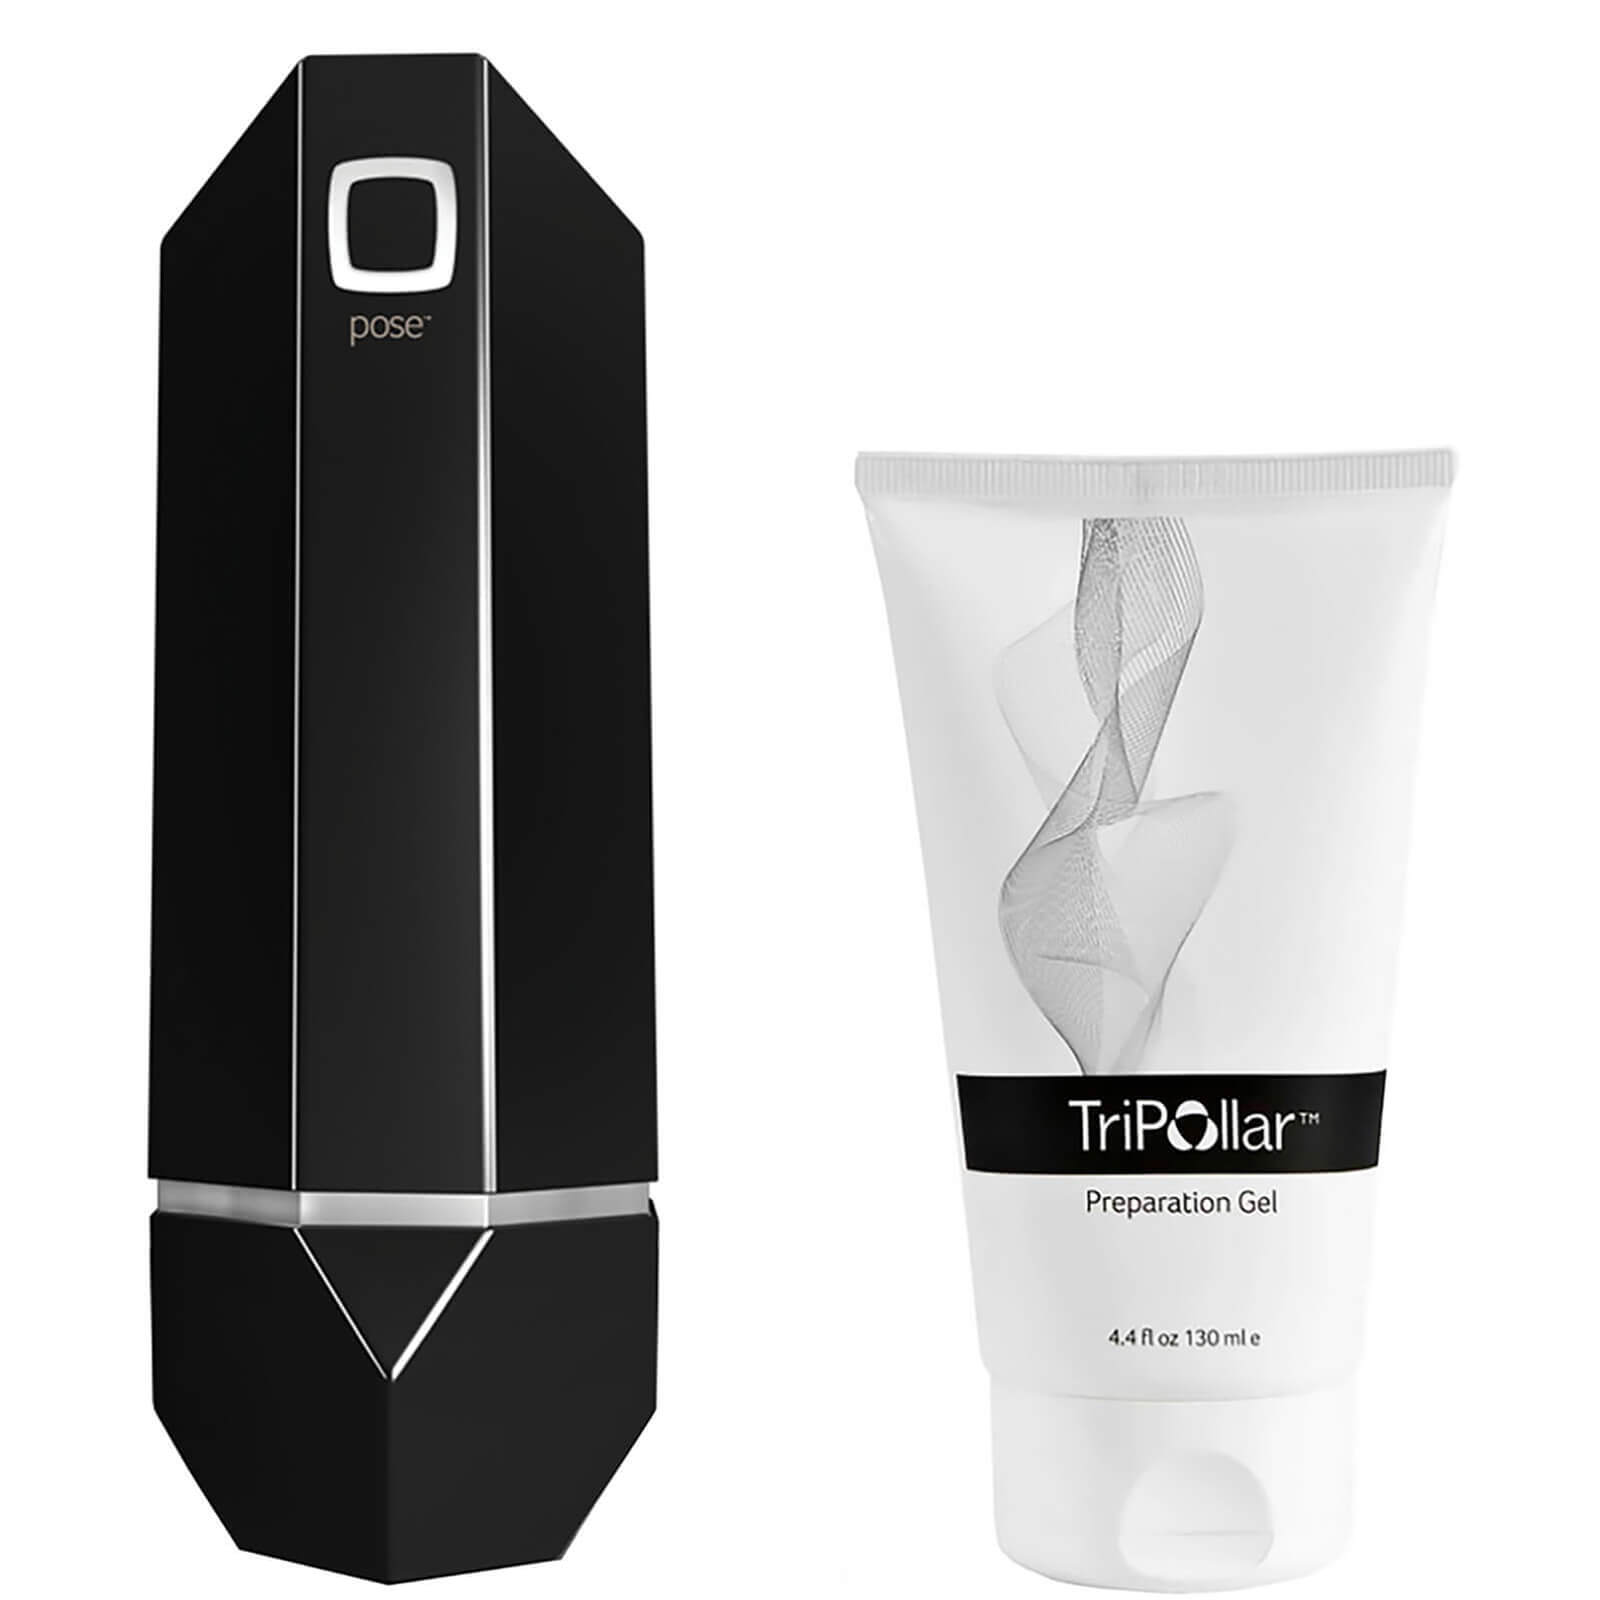 TriPollar POSE Skin Tightening Device for The Body – Black lookfantastic.com imagine